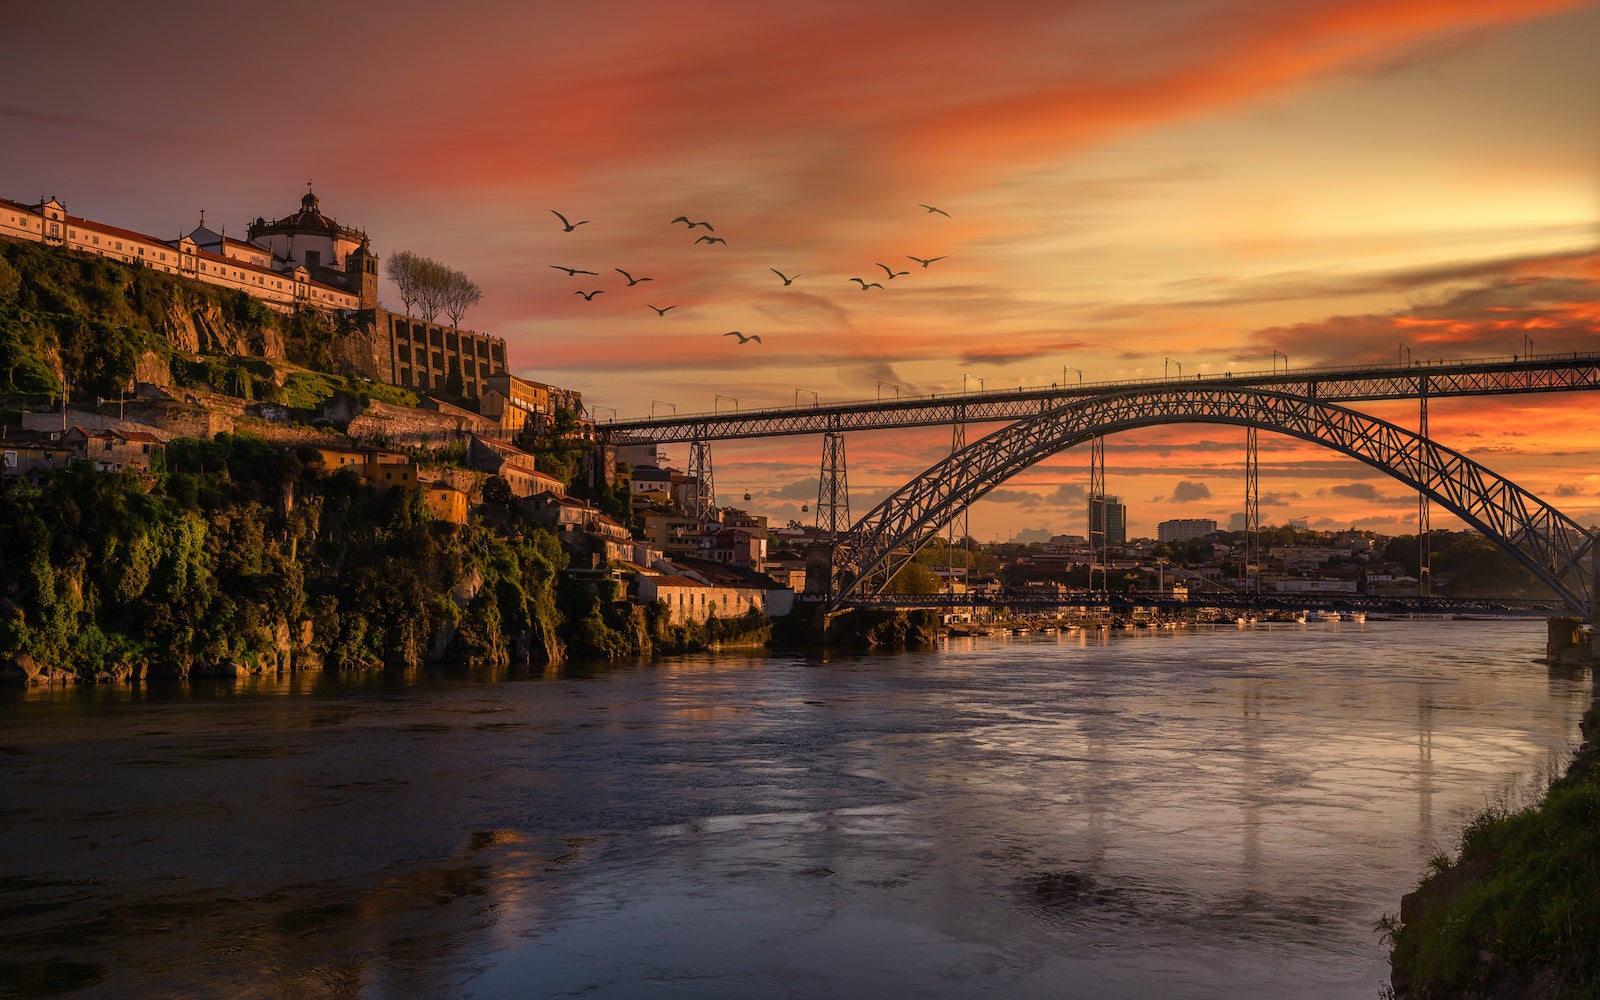 Sunset at bridge in Portugal